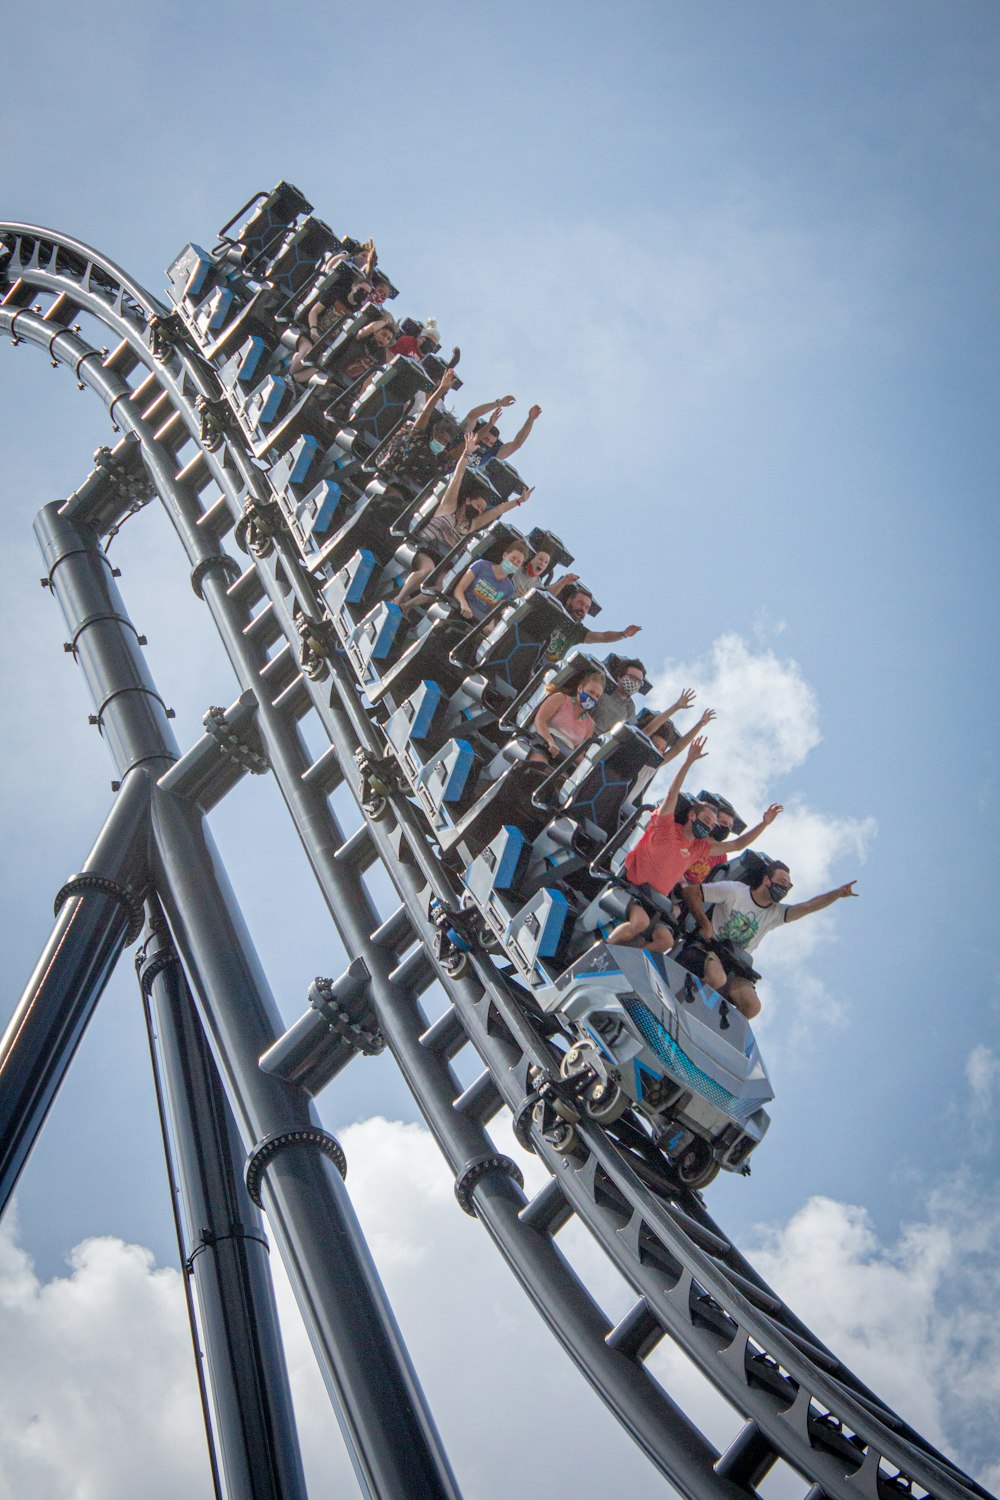 750+ Roller Coaster Pictures [HD] | Download Free Images on Unsplash